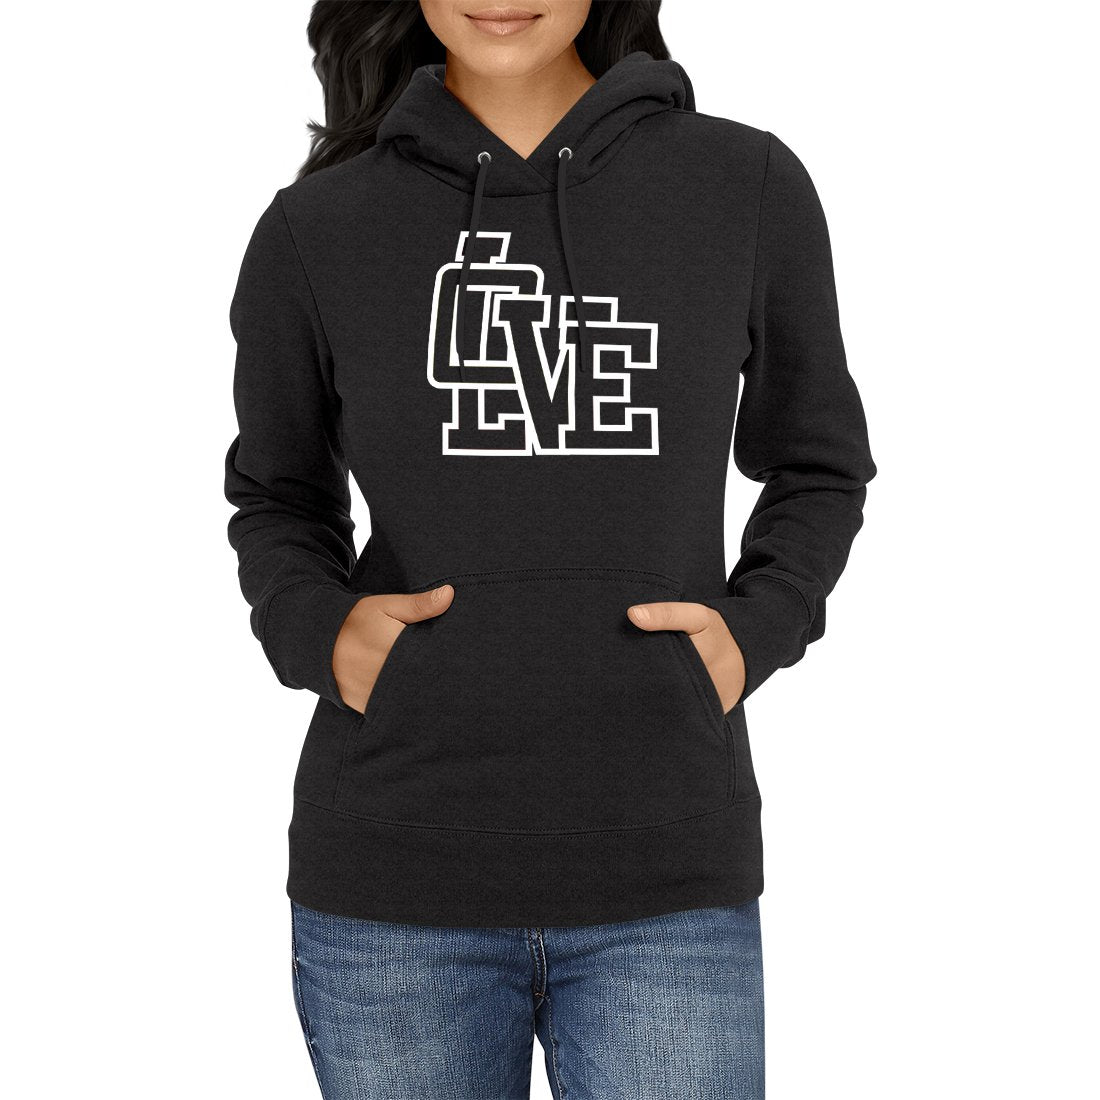 Love Matching Couple Cute Sweatshirts | Couple Hoodies- Black